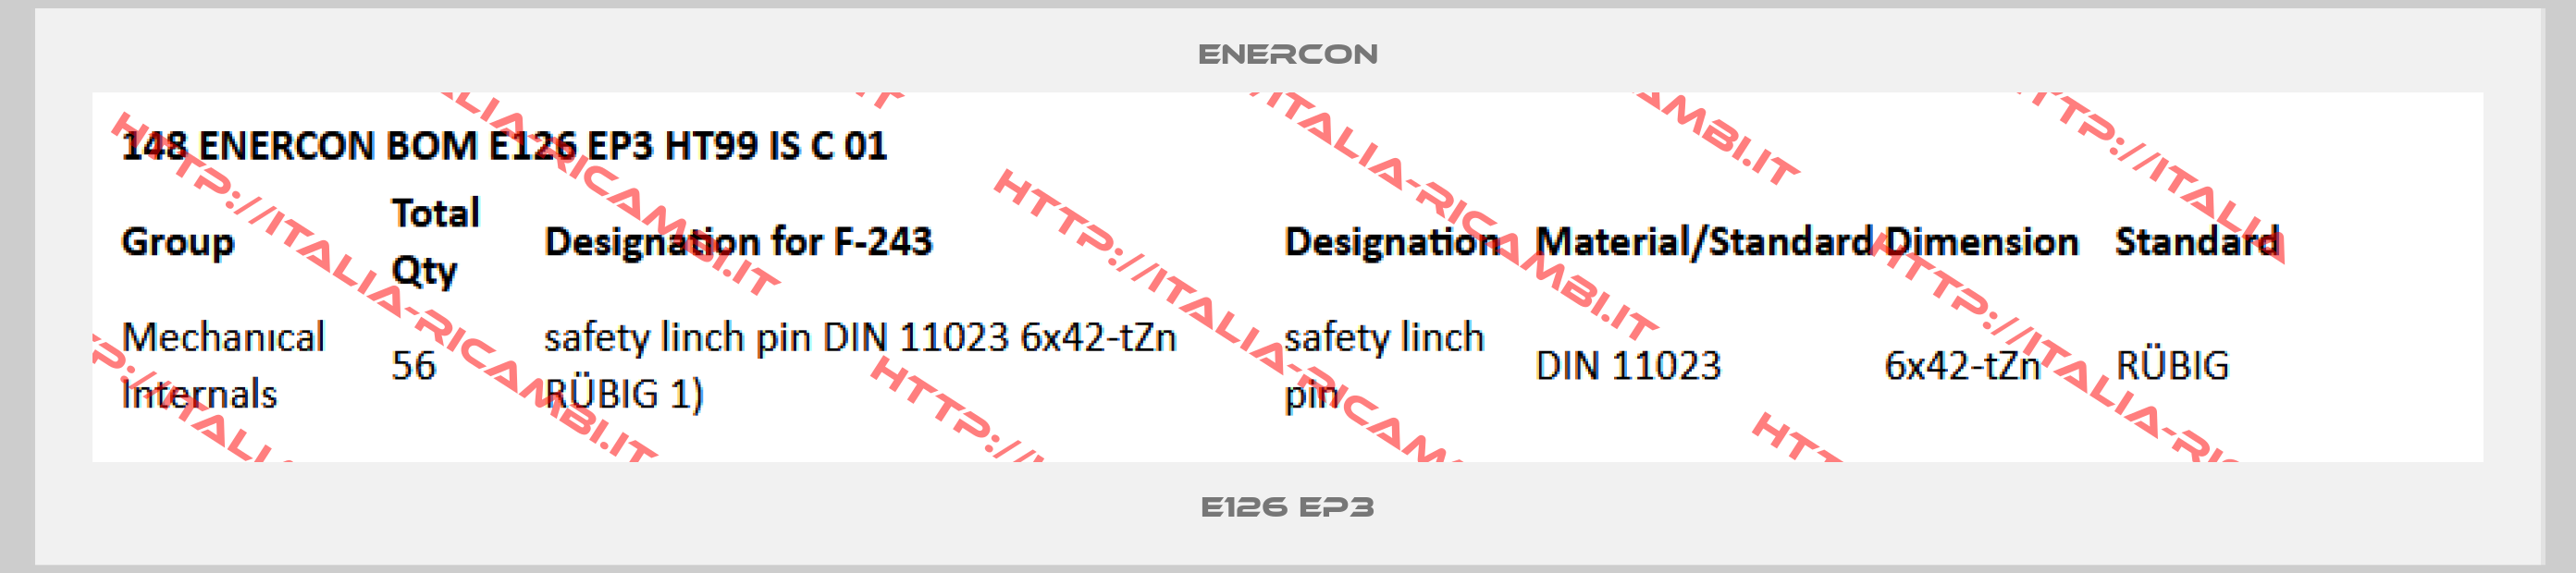 ENERCON-E126 EP3